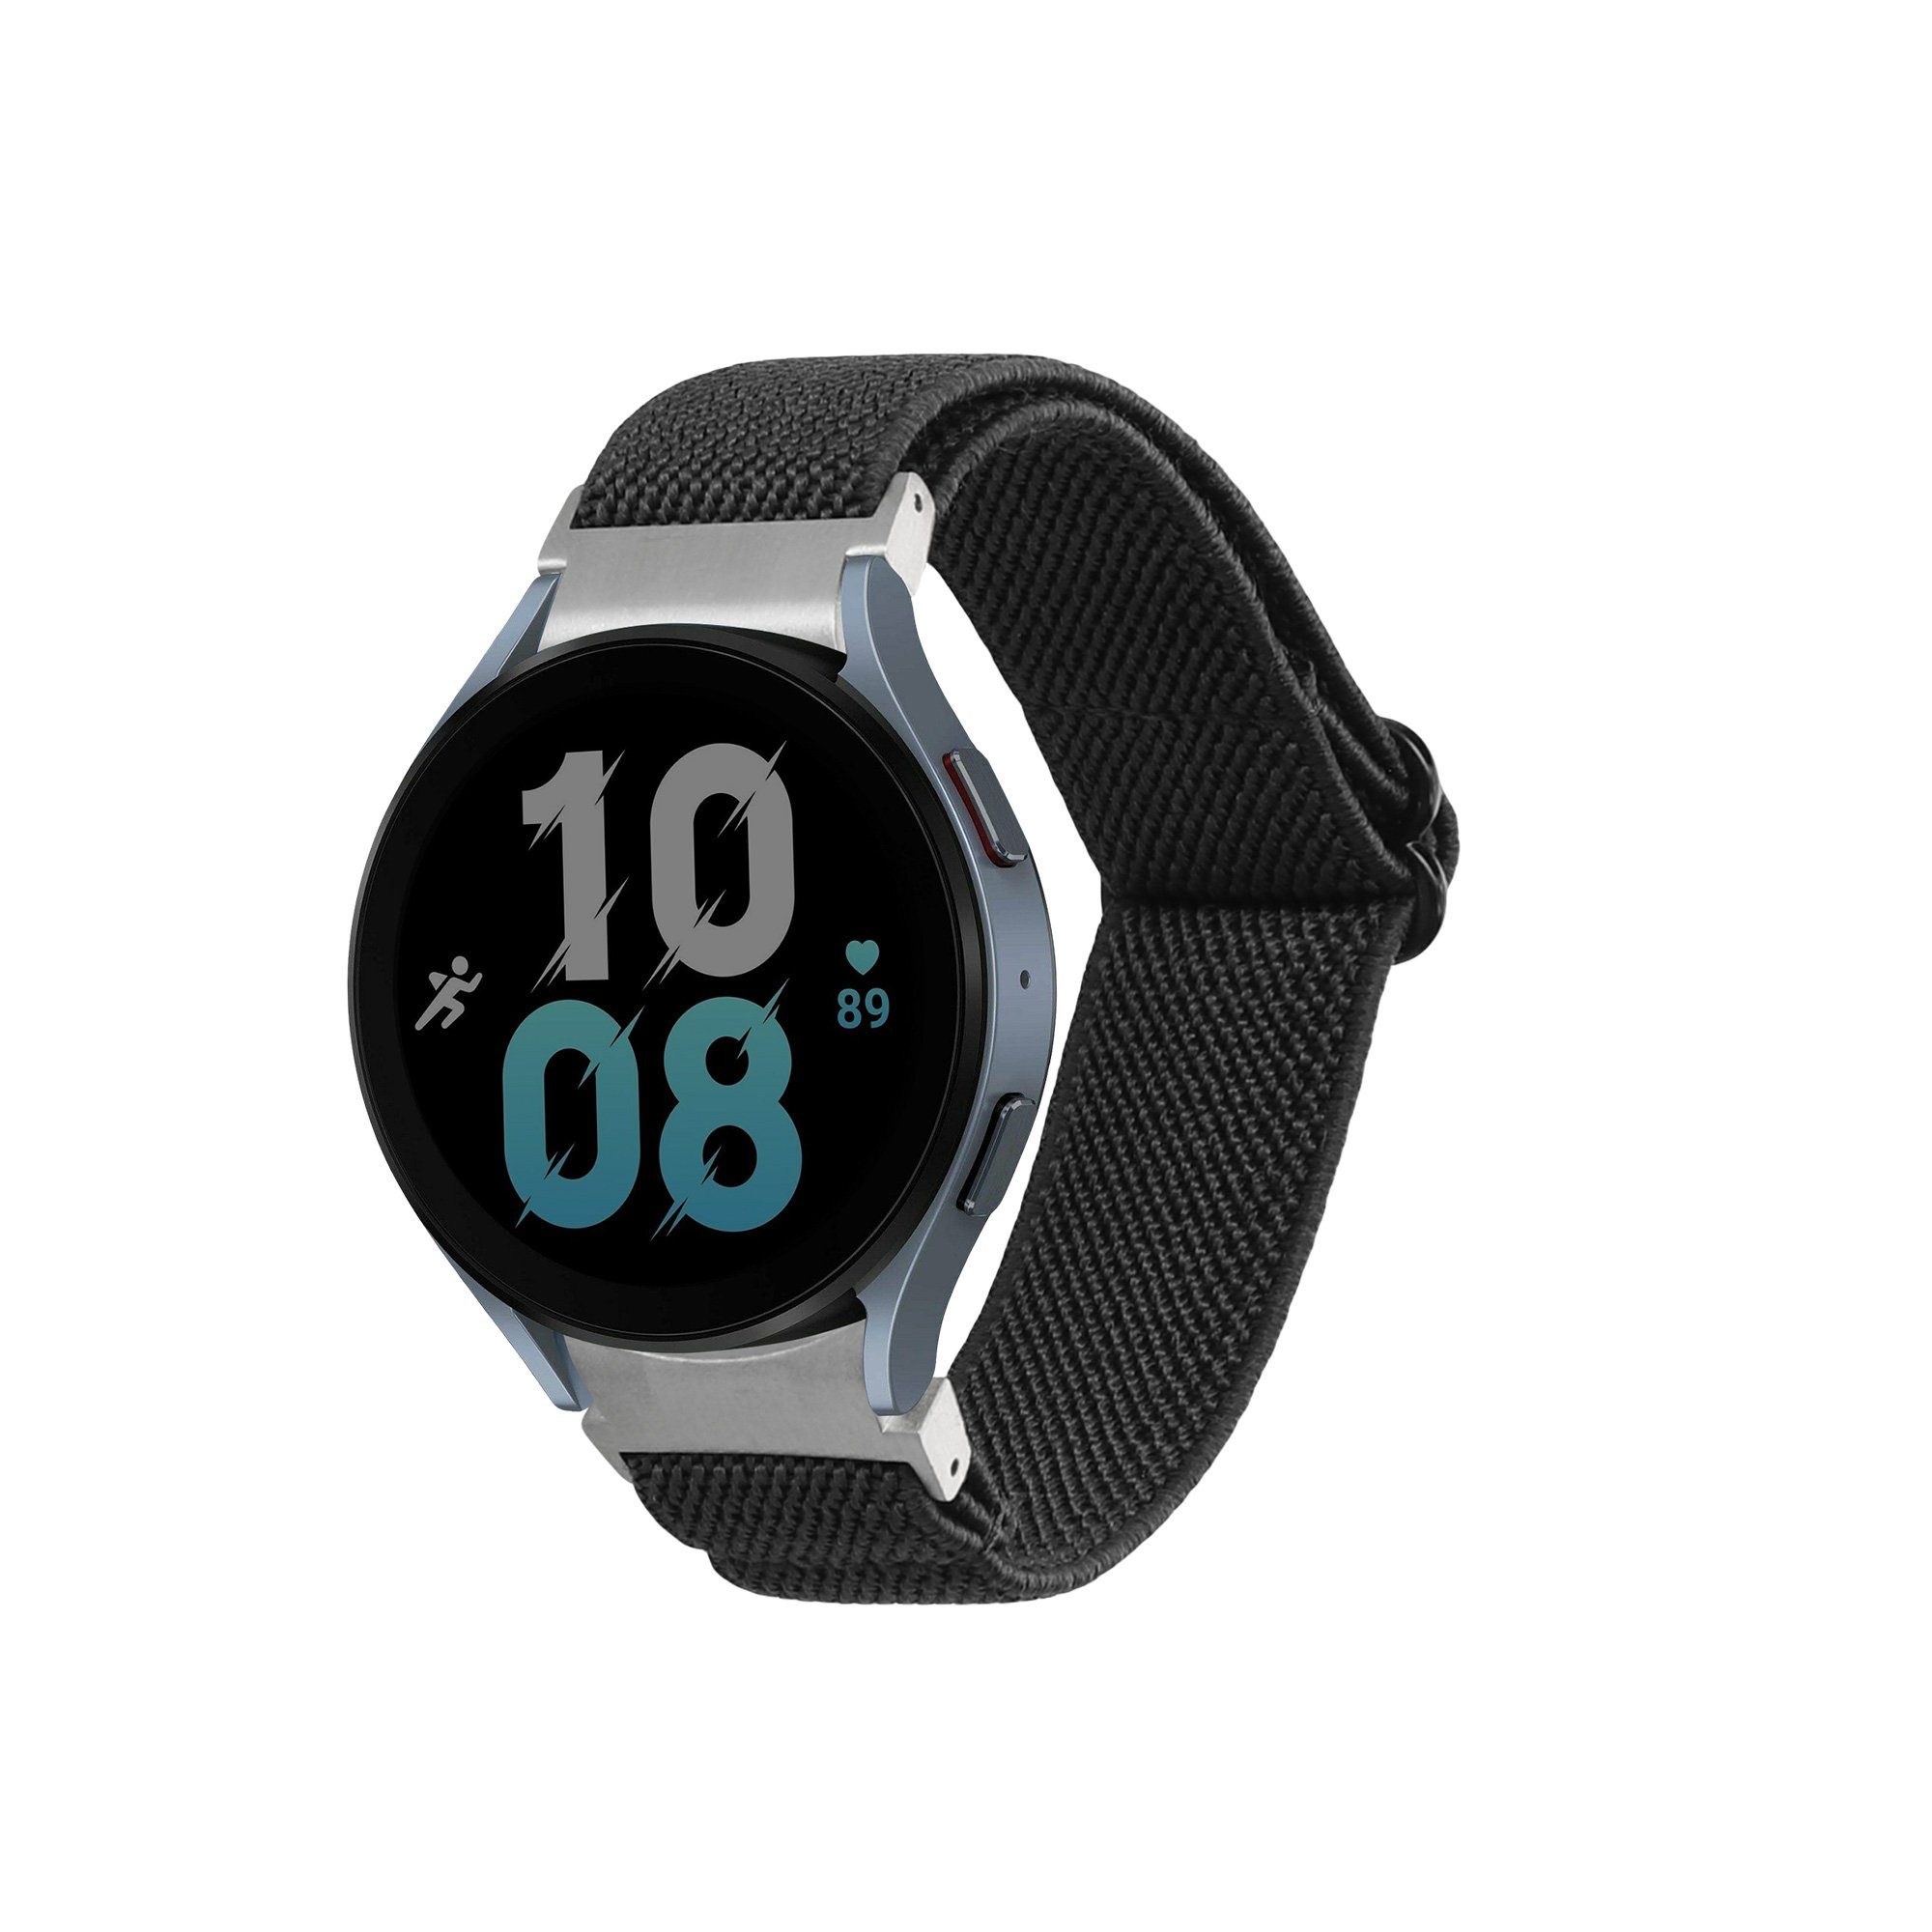 Samsung Galaxy Uhrenarmband Band 5 für kwmobile Watch cm Watch Innenmaße 6 Watch 5 - Armband Pro - / 6 / Nylon 14 Fitnesstracker 22 Classic, / von Sportarmband